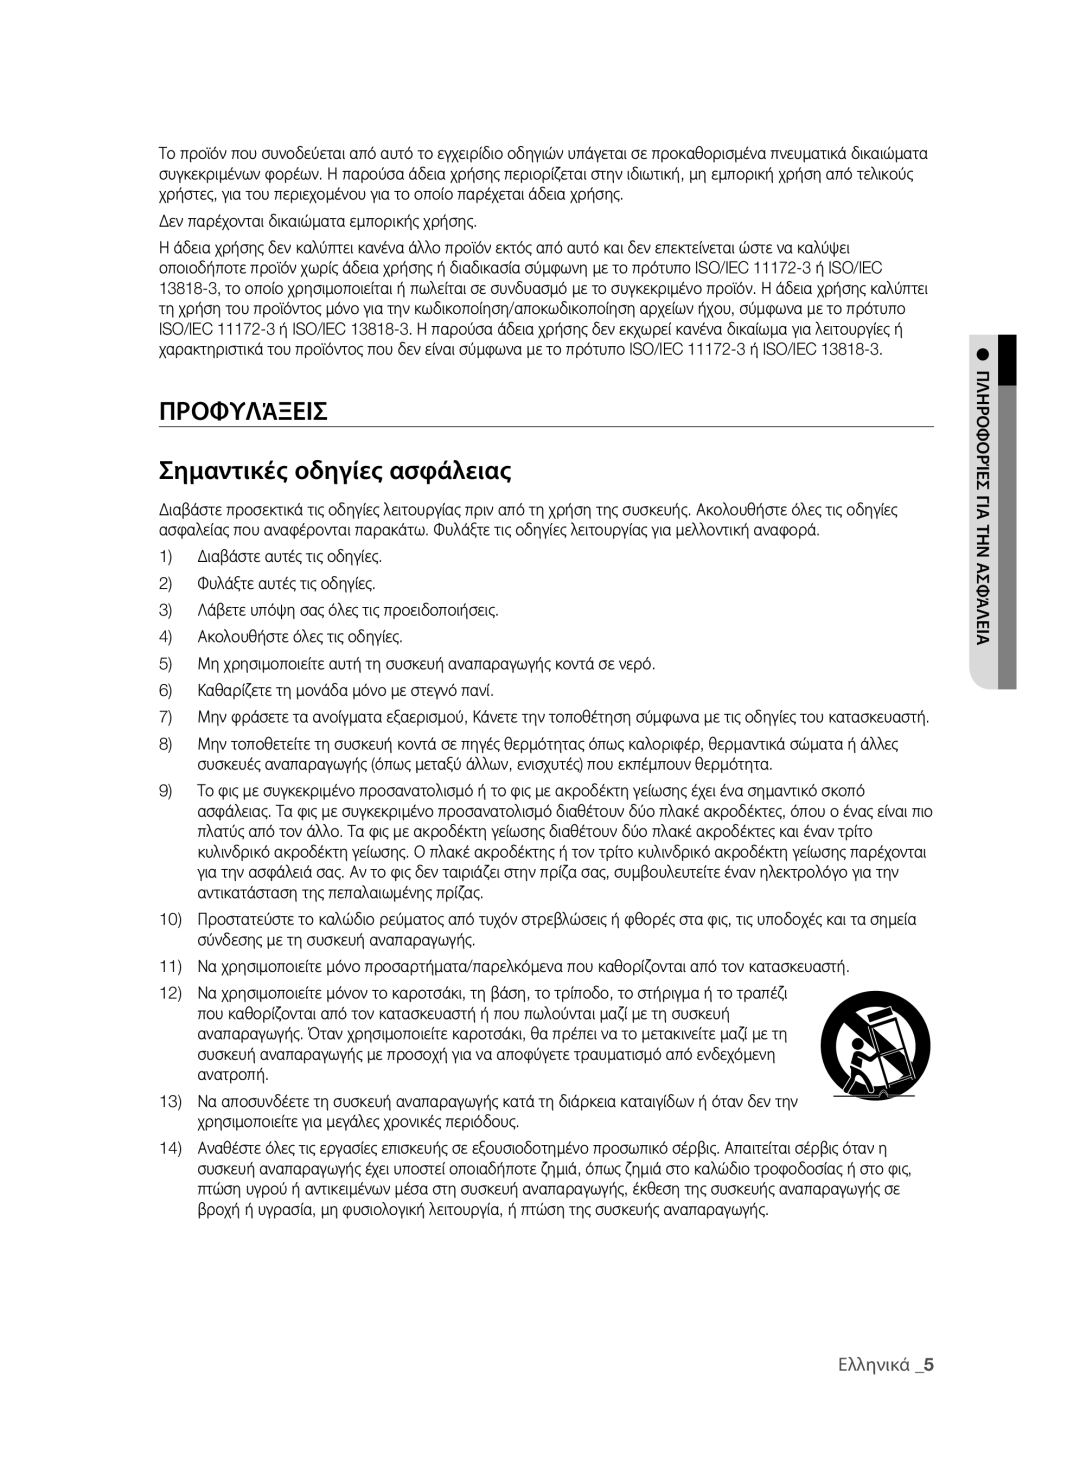 Samsung BD-P1580/EDC manual Προφυλάξεις Σημαντικές οδηγίες ασφάλειας, Ελληνικά  